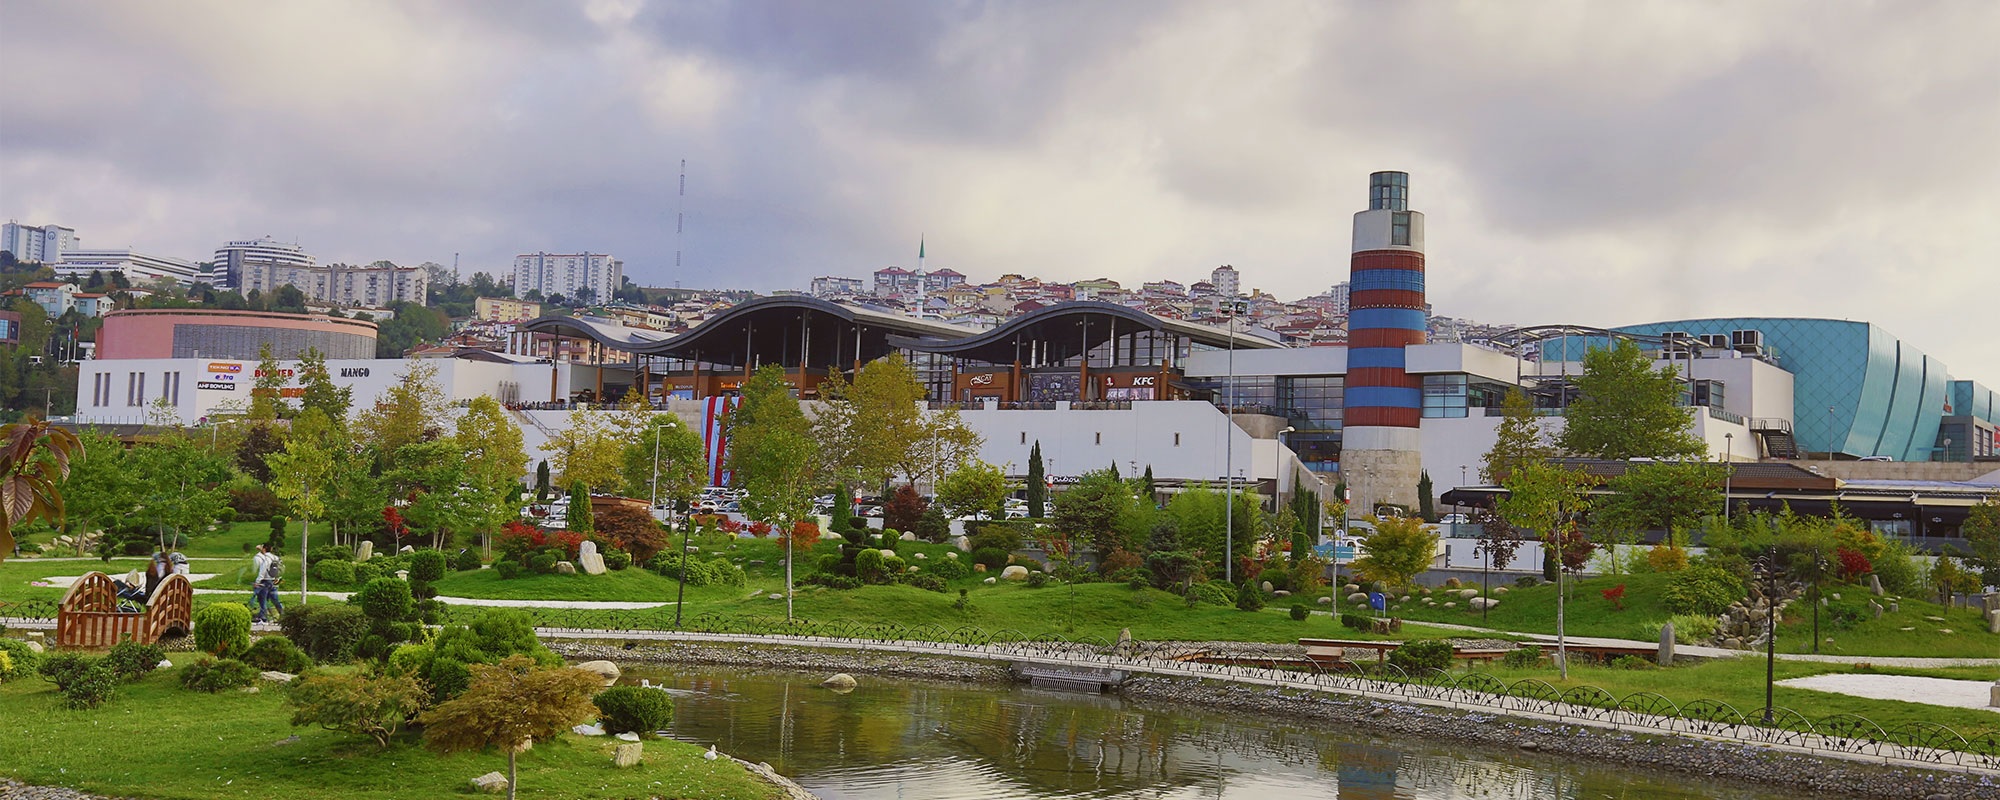 Shopping Malls In Trabzon